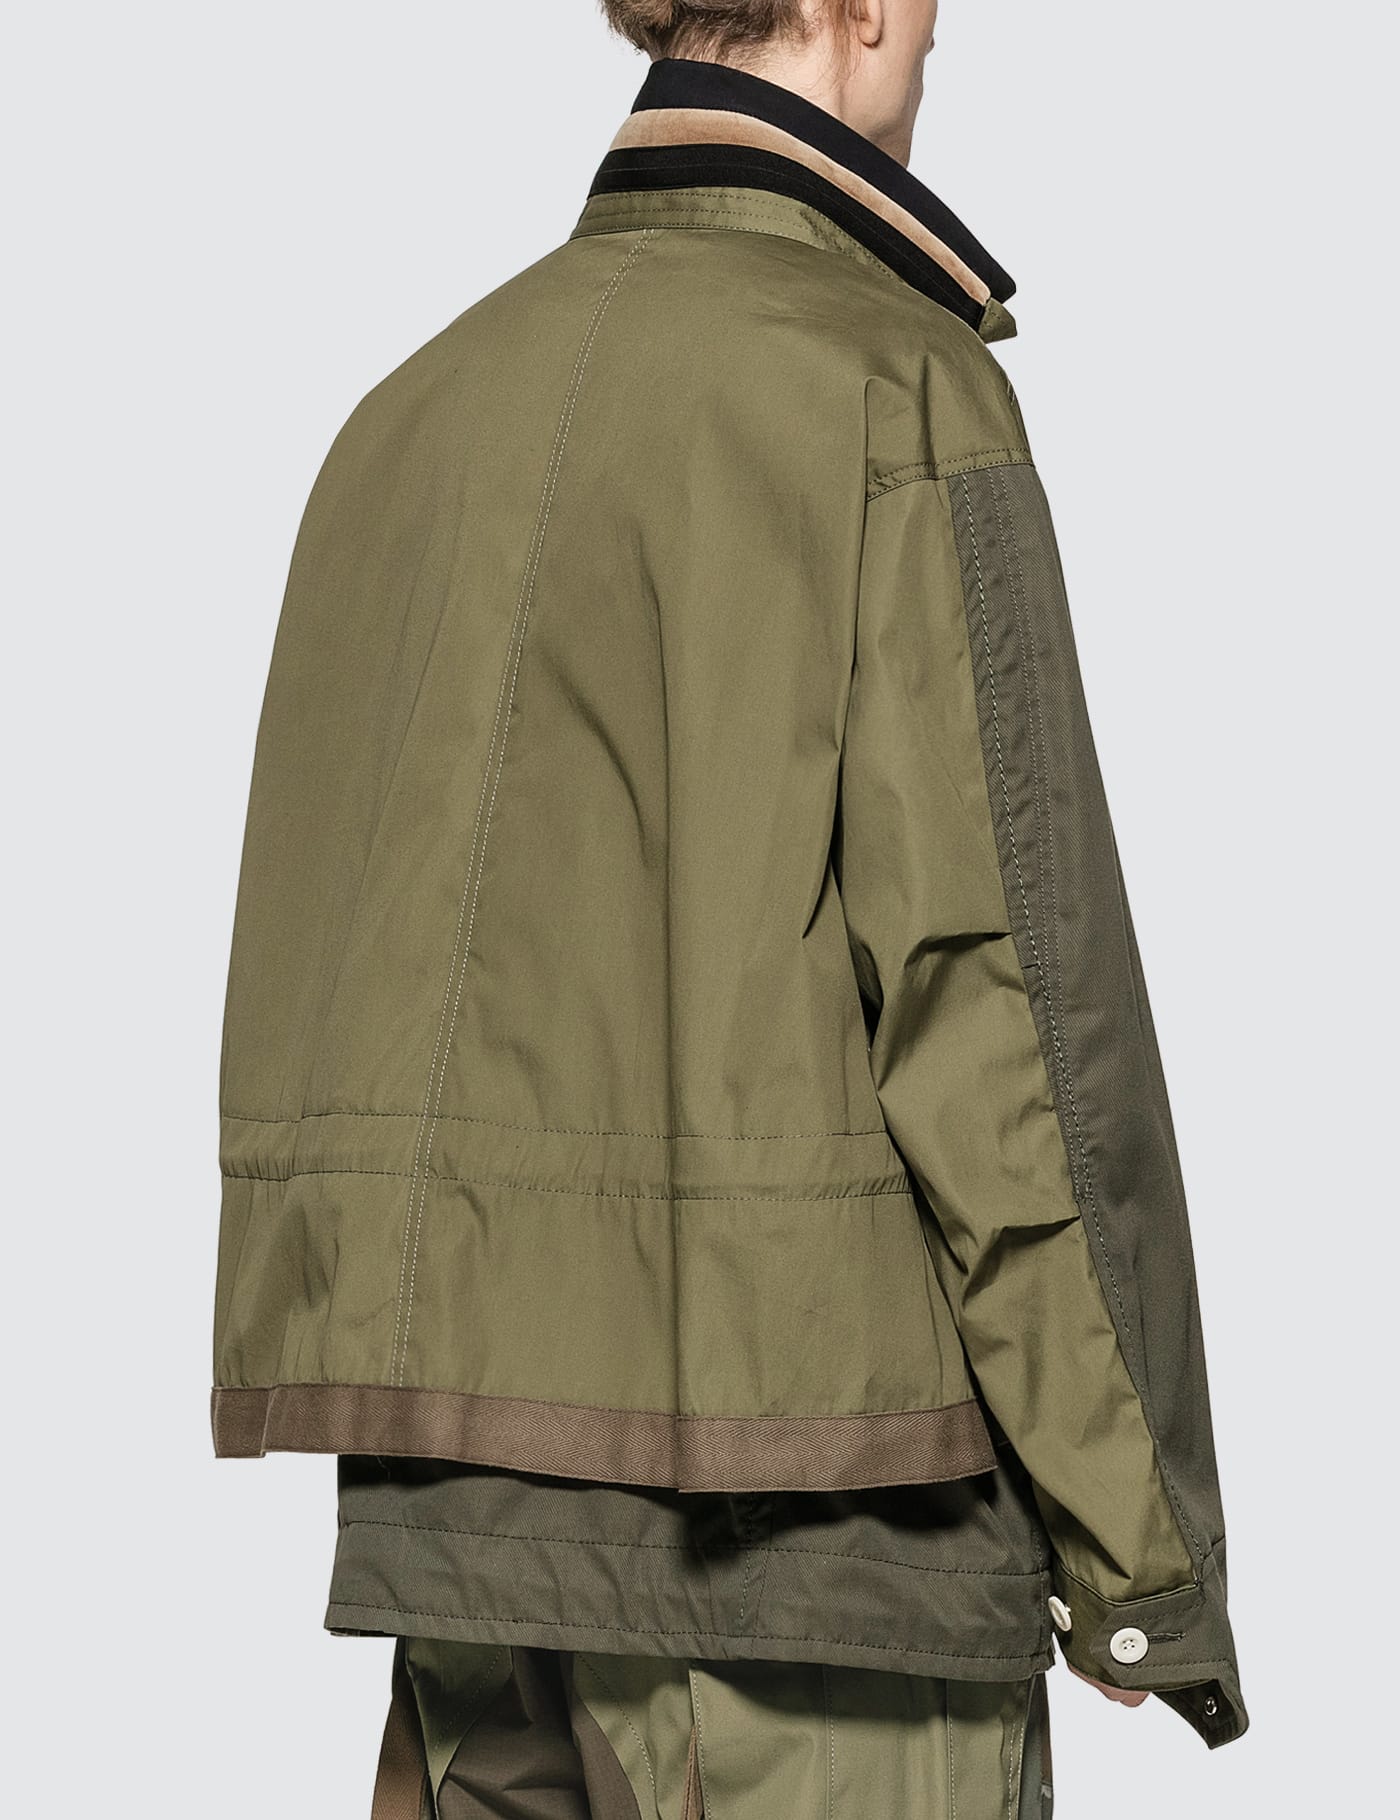 Sacai - Fabric Combo Jacket | HBX - HYPEBEAST 为您搜罗全球潮流时尚品牌